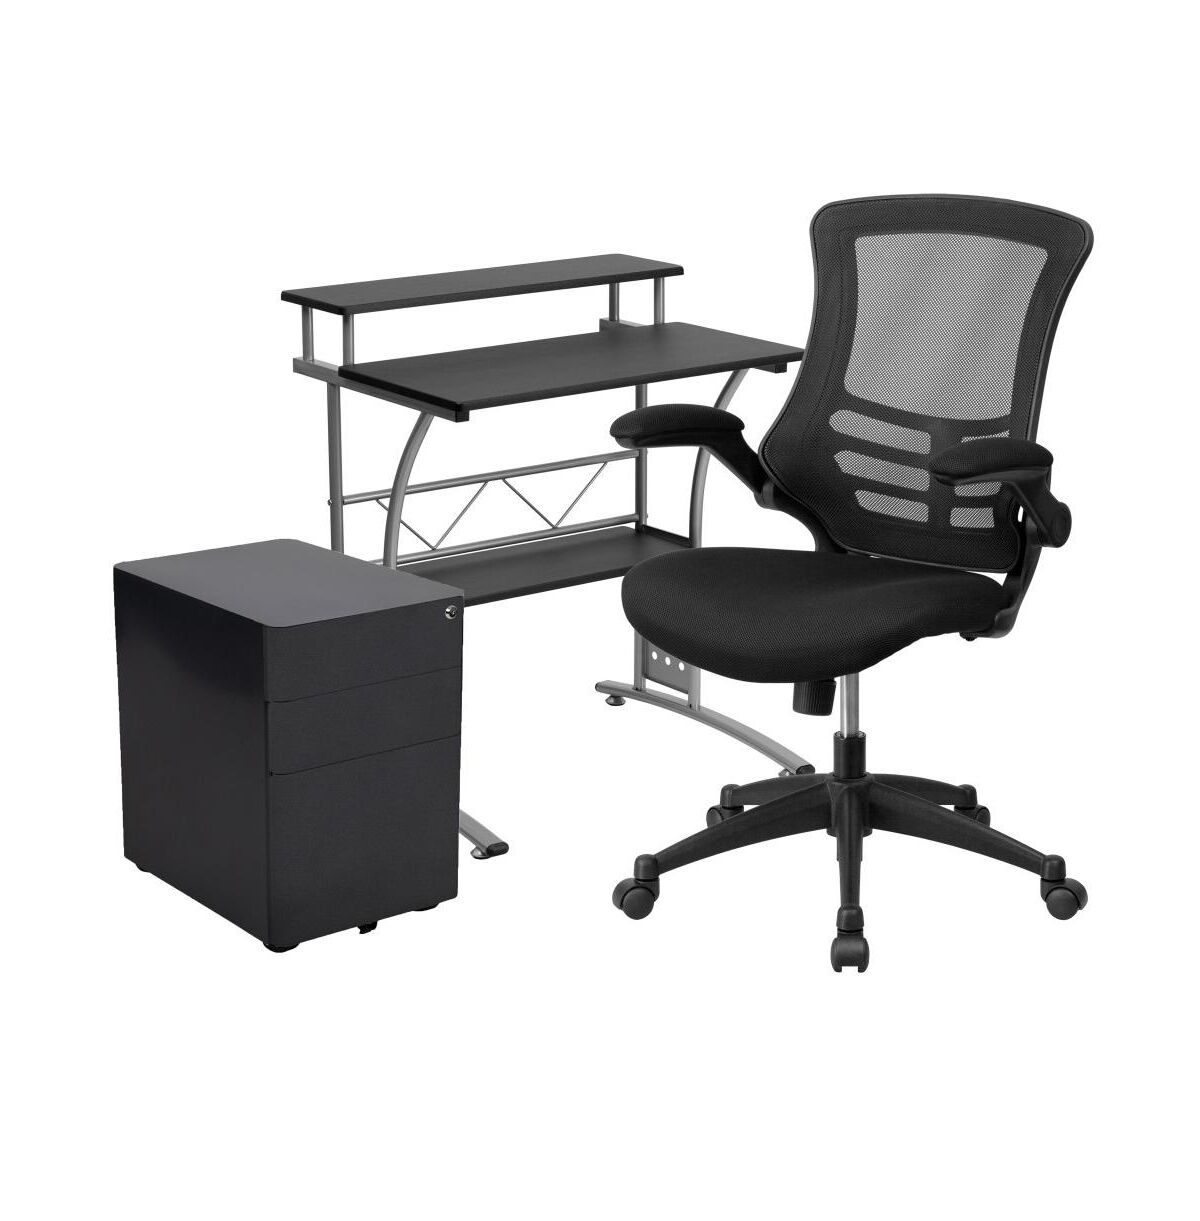 Emma+oliver Work From Home Kit-Computer Desk, Ergonomic Office Chair, Mobile Filing Cabinet - Black